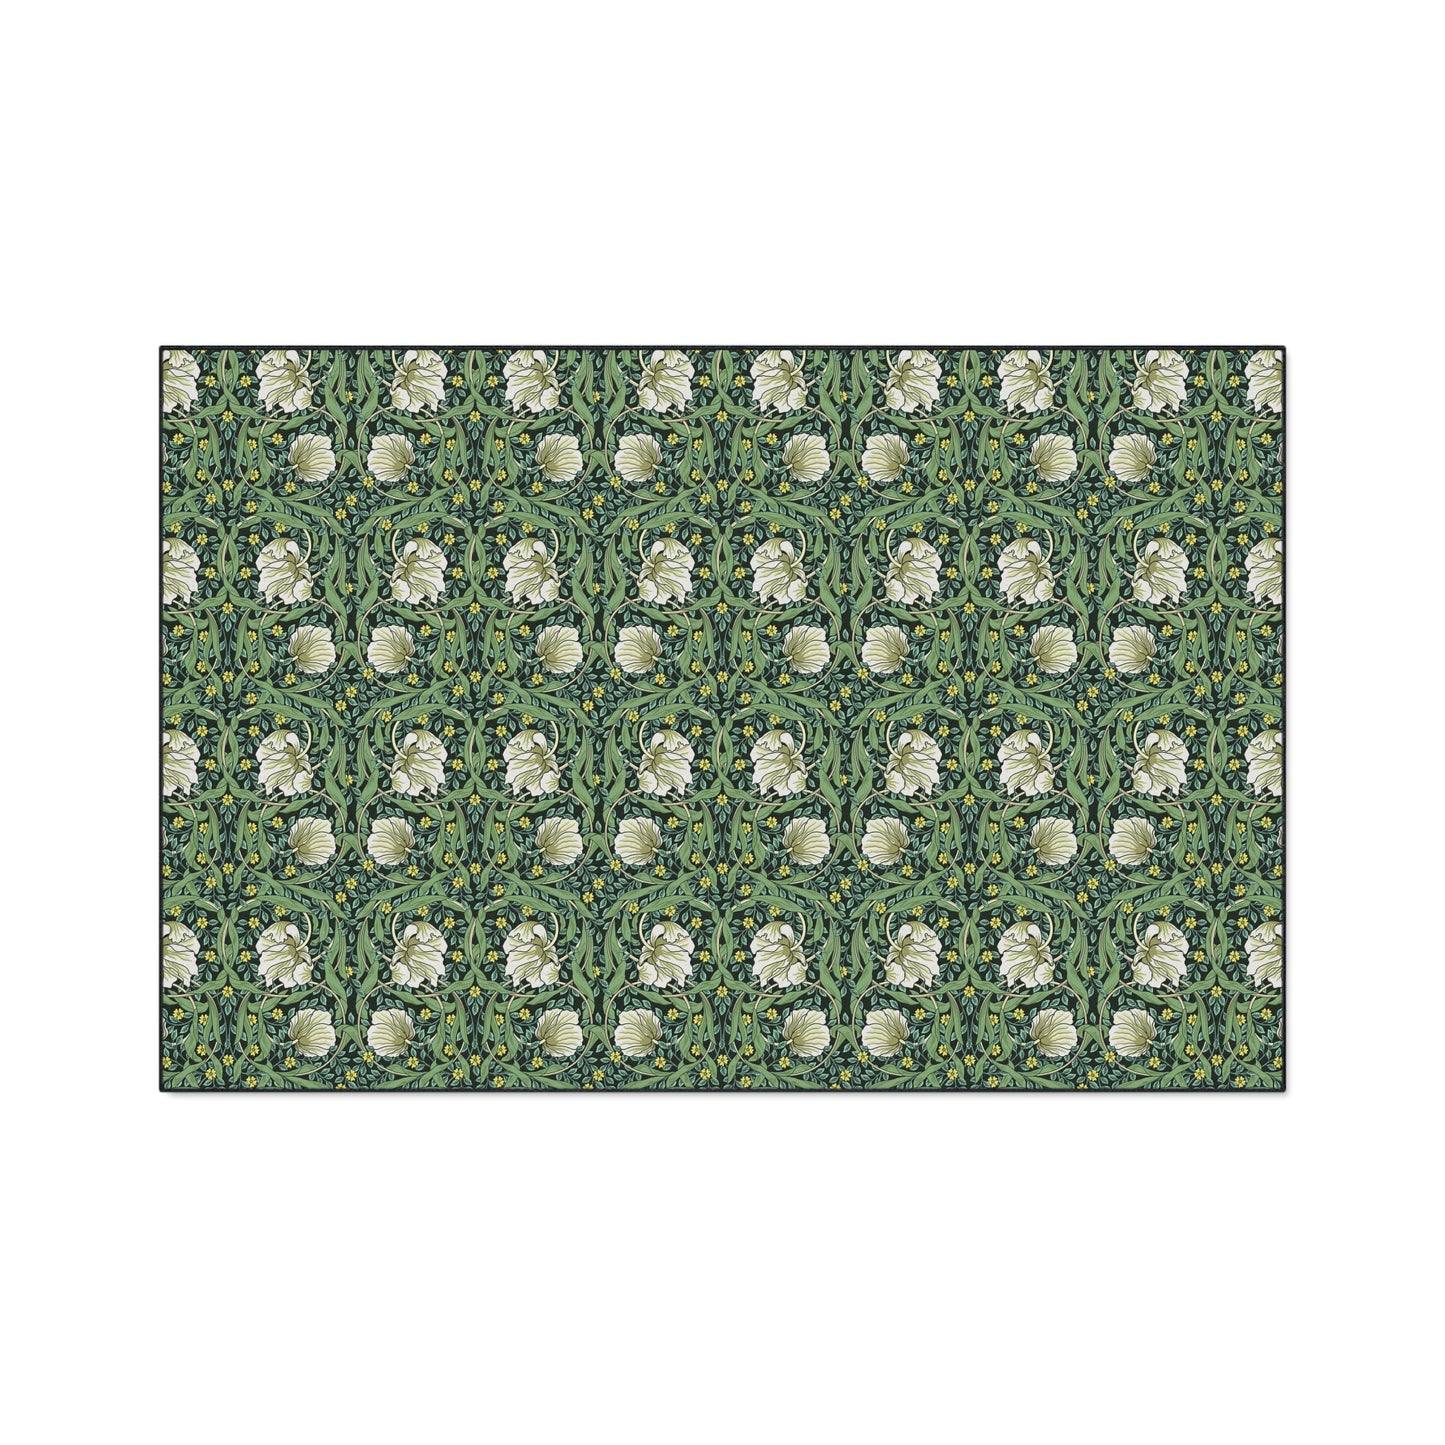 william-morris-co-heavy-duty-floor-mat-floor-mat-pimpernel-collection-green-1